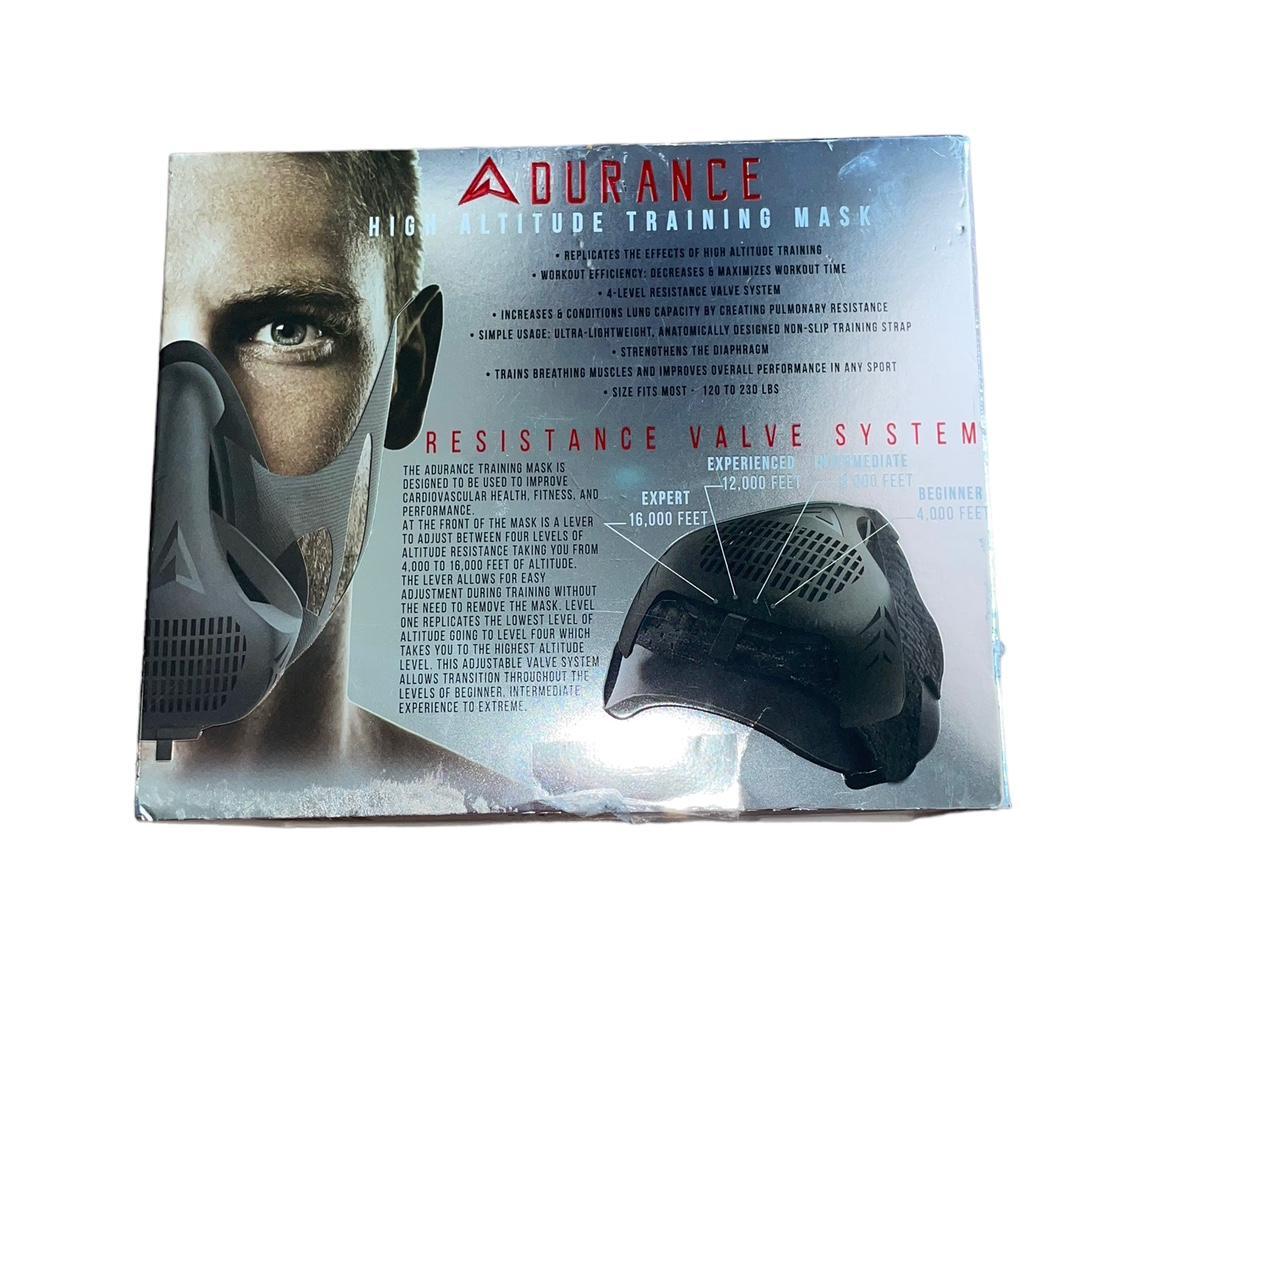 Adurance High Altitude Breathing Training Mask Aduro Sport Workout